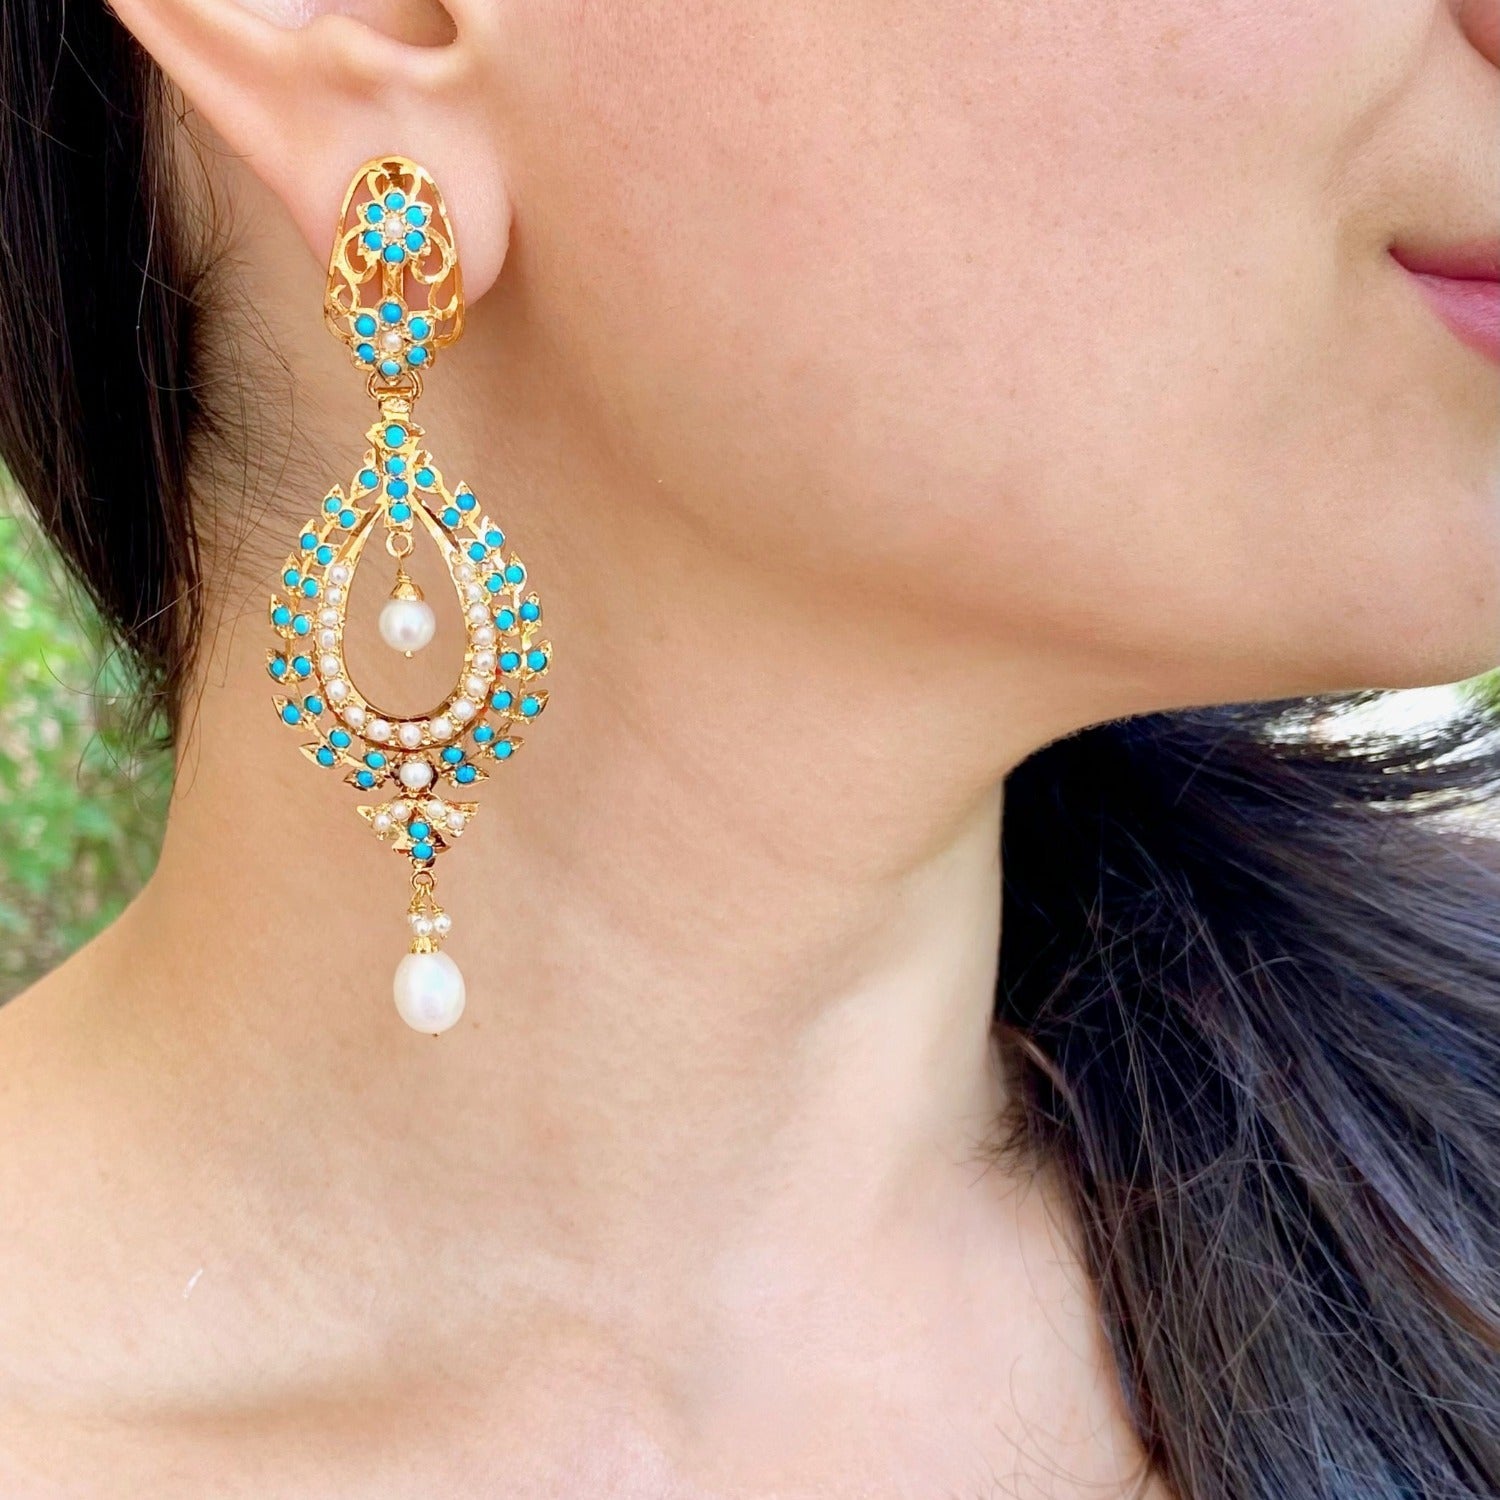 Indian earrings design